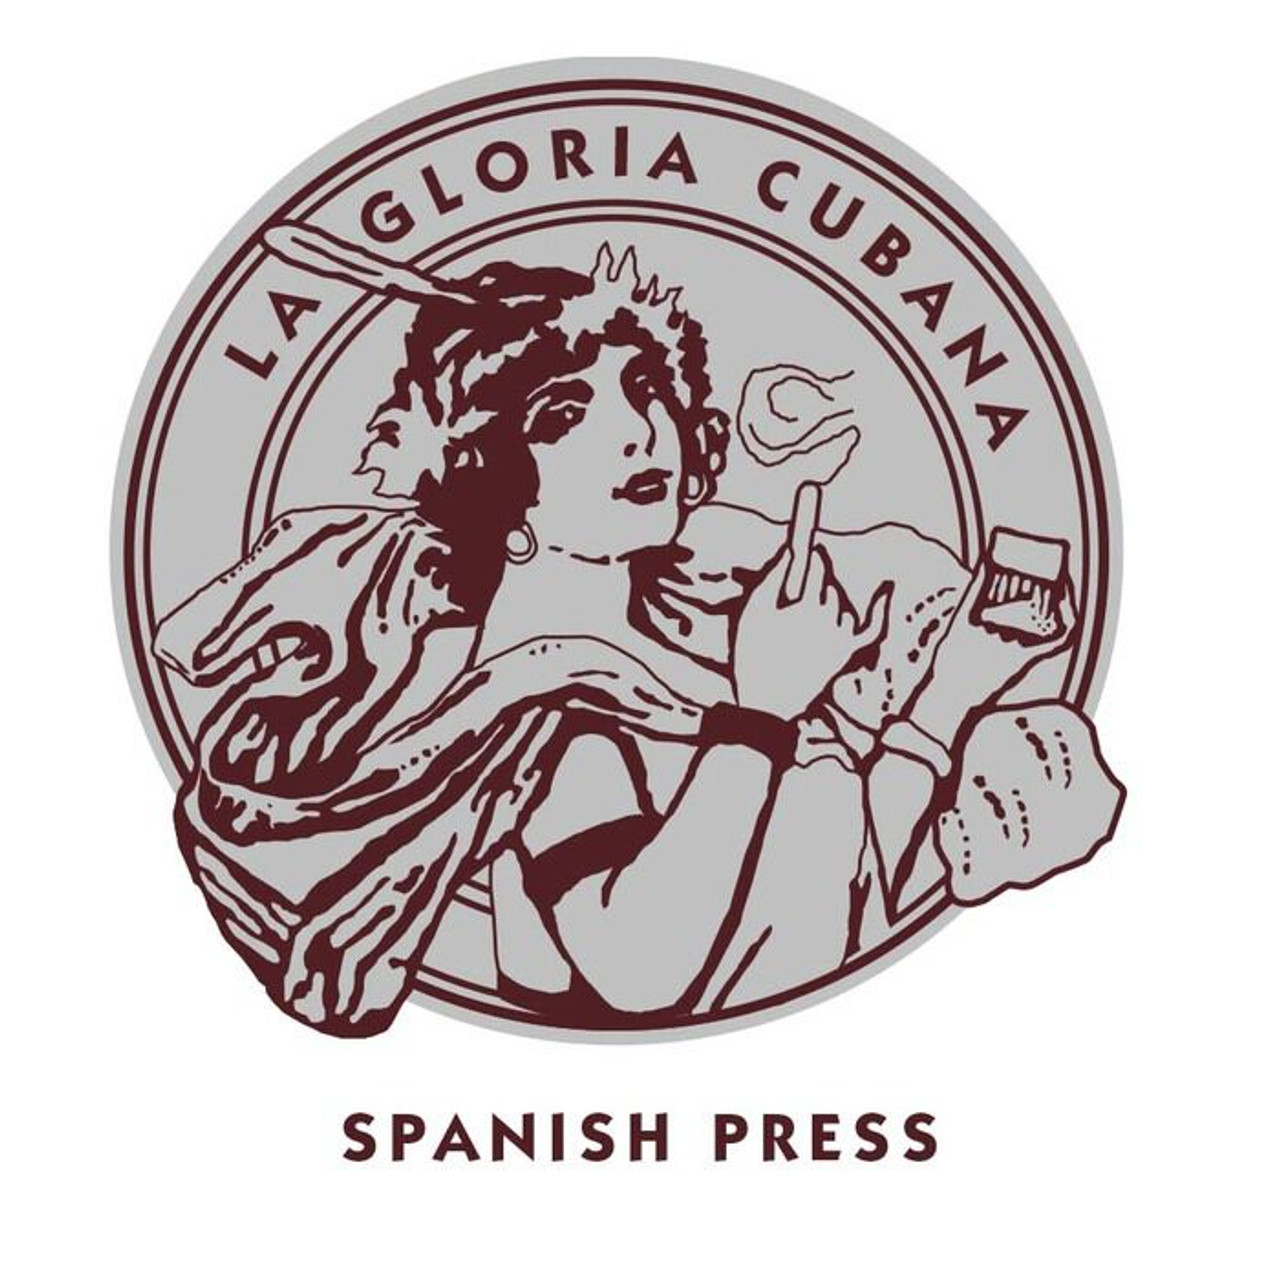 La Gloria Cubana Spanish Press Toro Cigars - 6.5 x 52 (Box of 20)